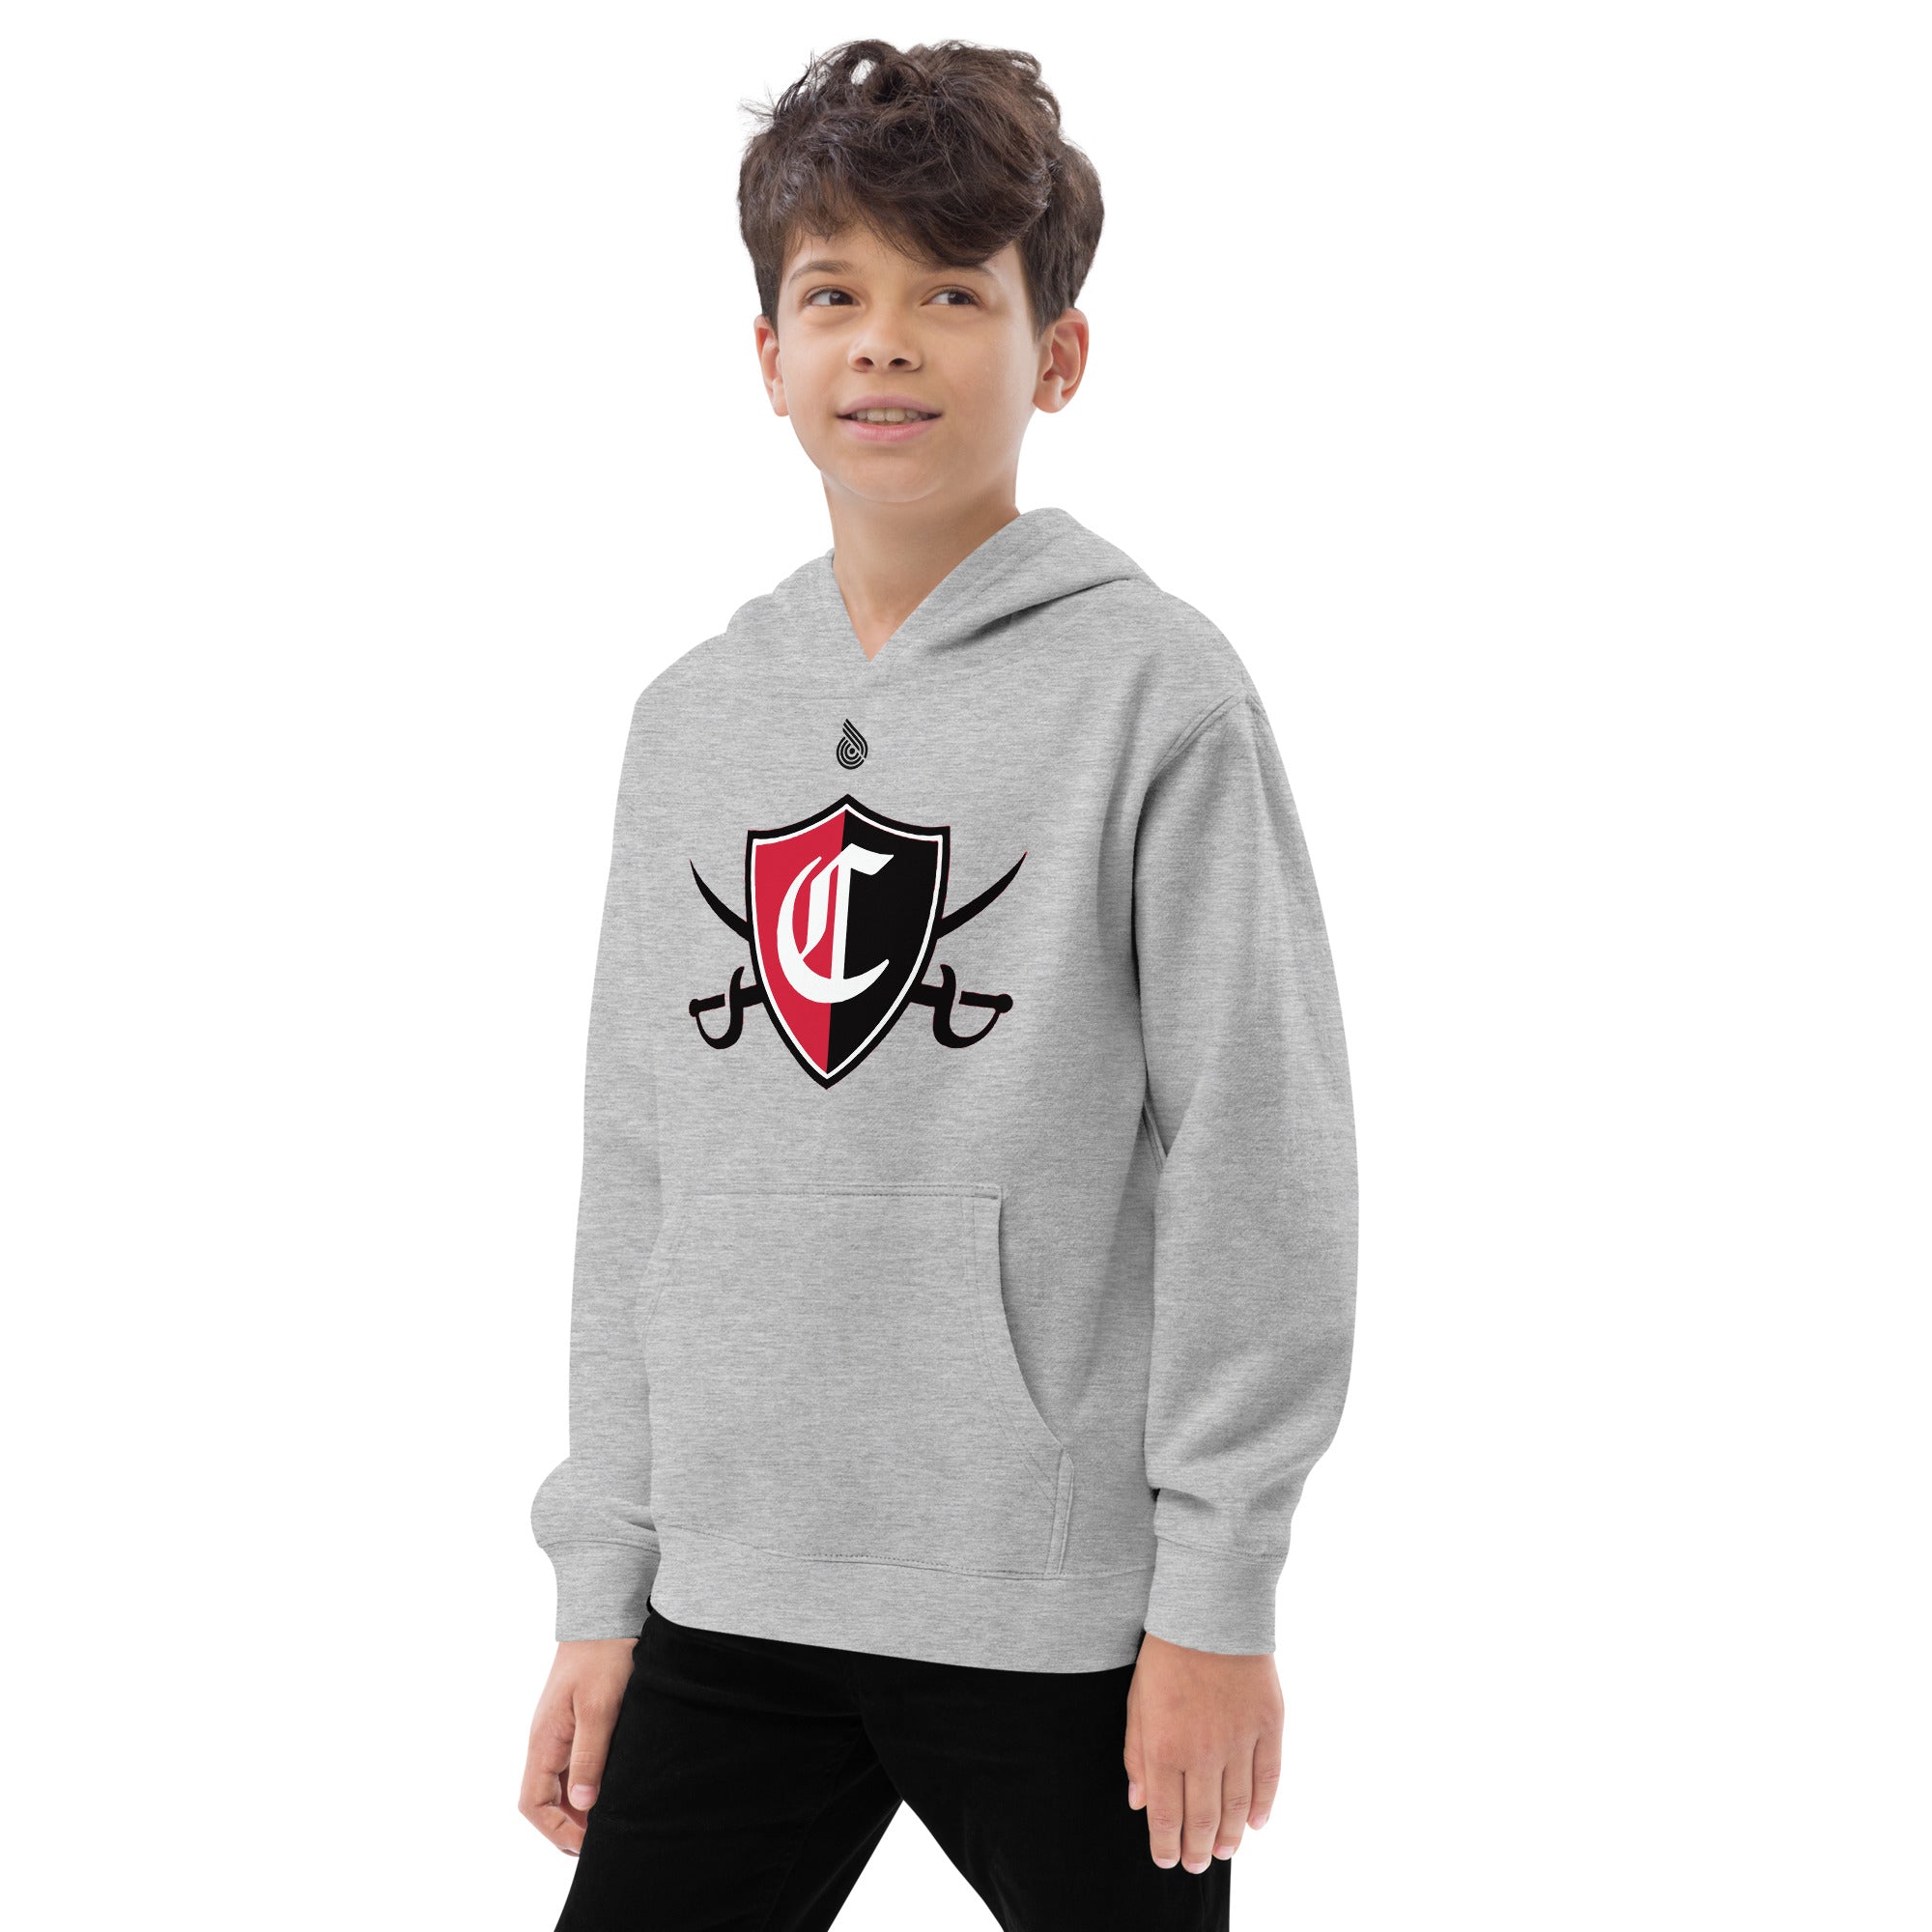 Clackamas Youth fleece hoodie